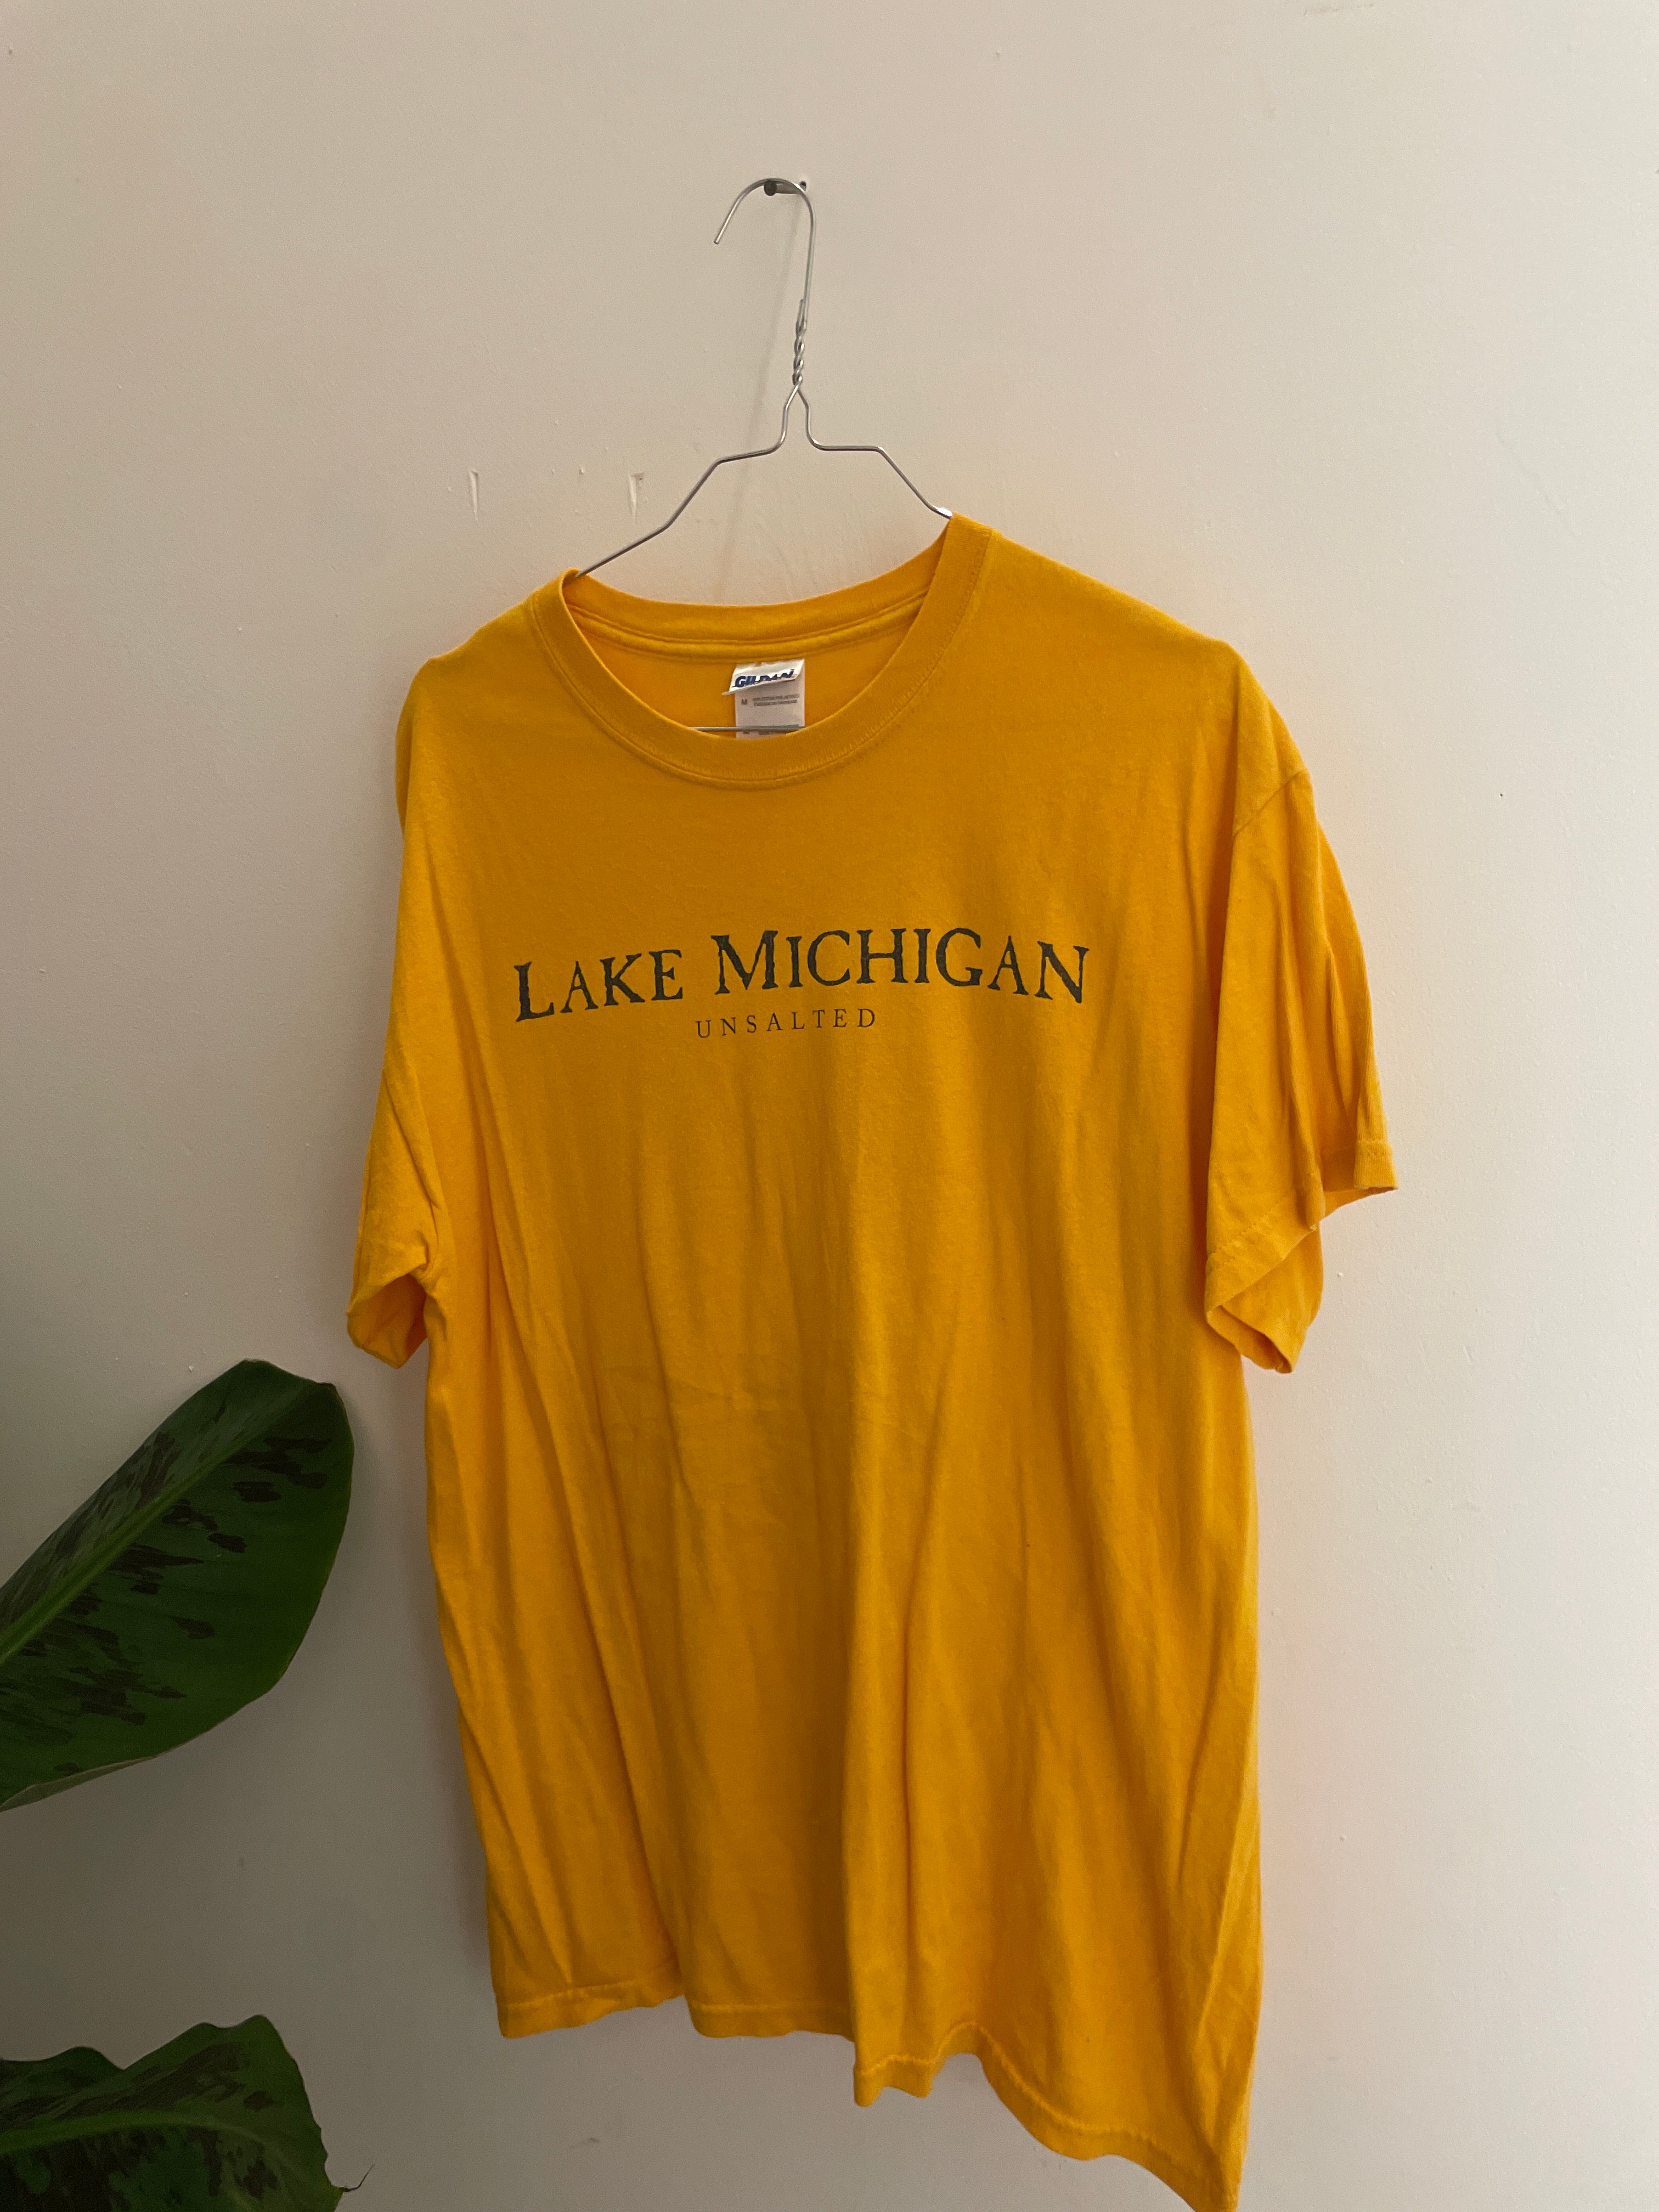 Vintage Gildan lake michigan graphics yellow tshirt size M